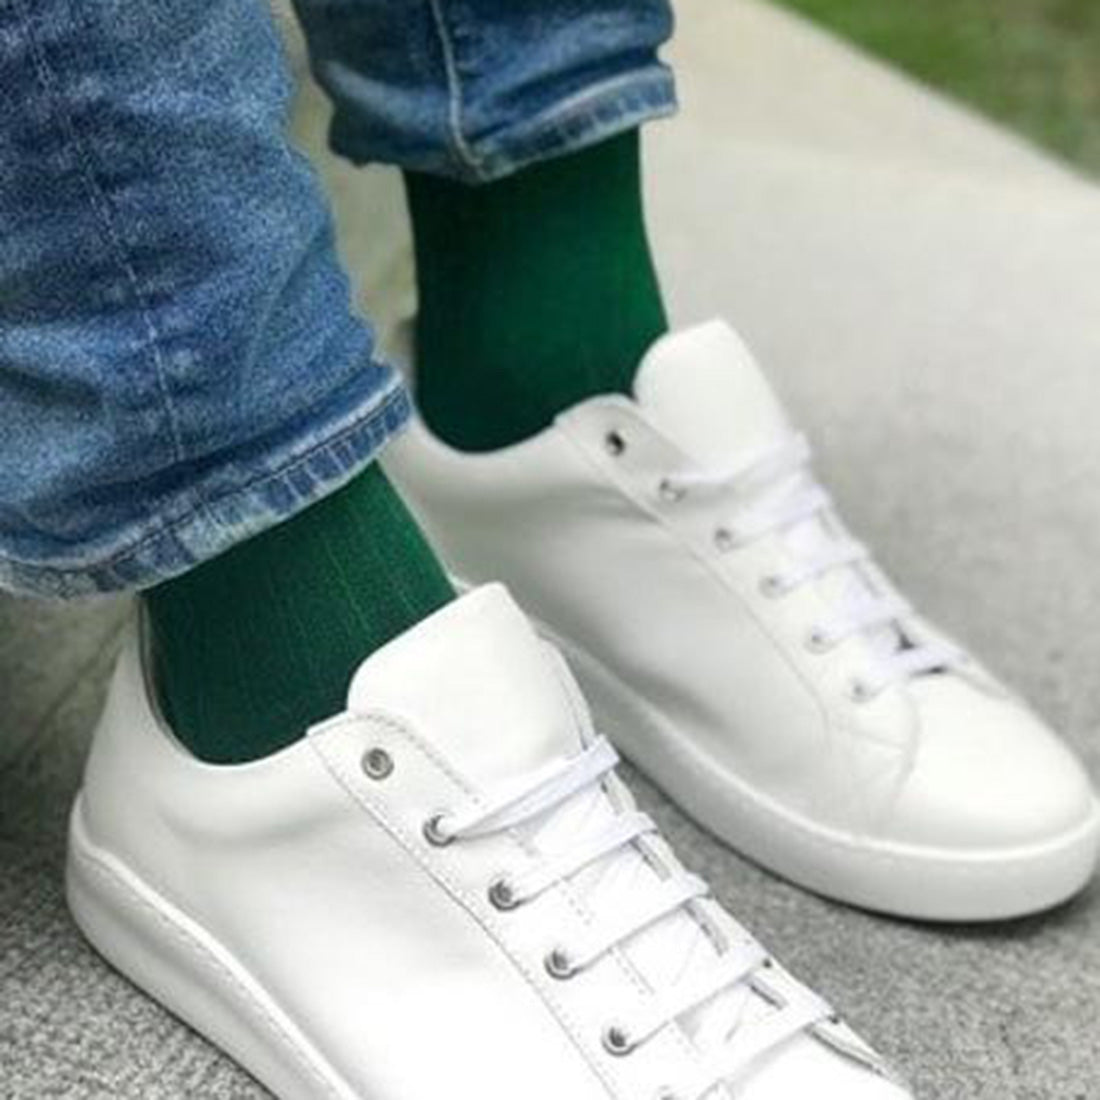 socks-racing-green-bamboo-socks-comfort-cuff-2.jpg